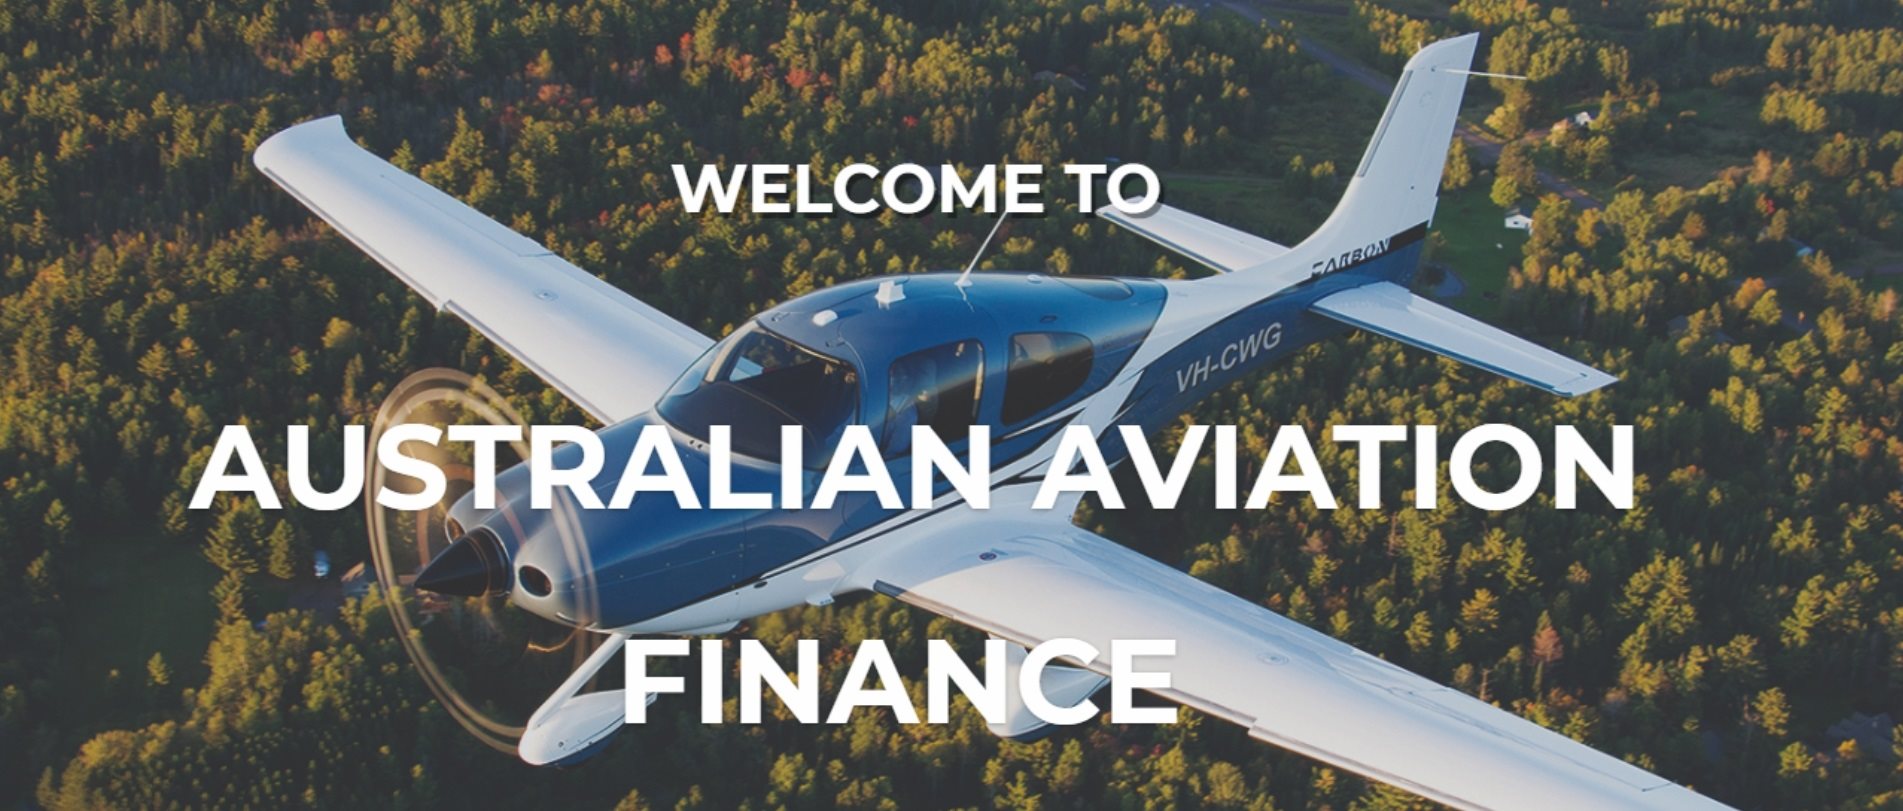 Australian Aviation Finance Aircraft Dealer Plane Sales Australia